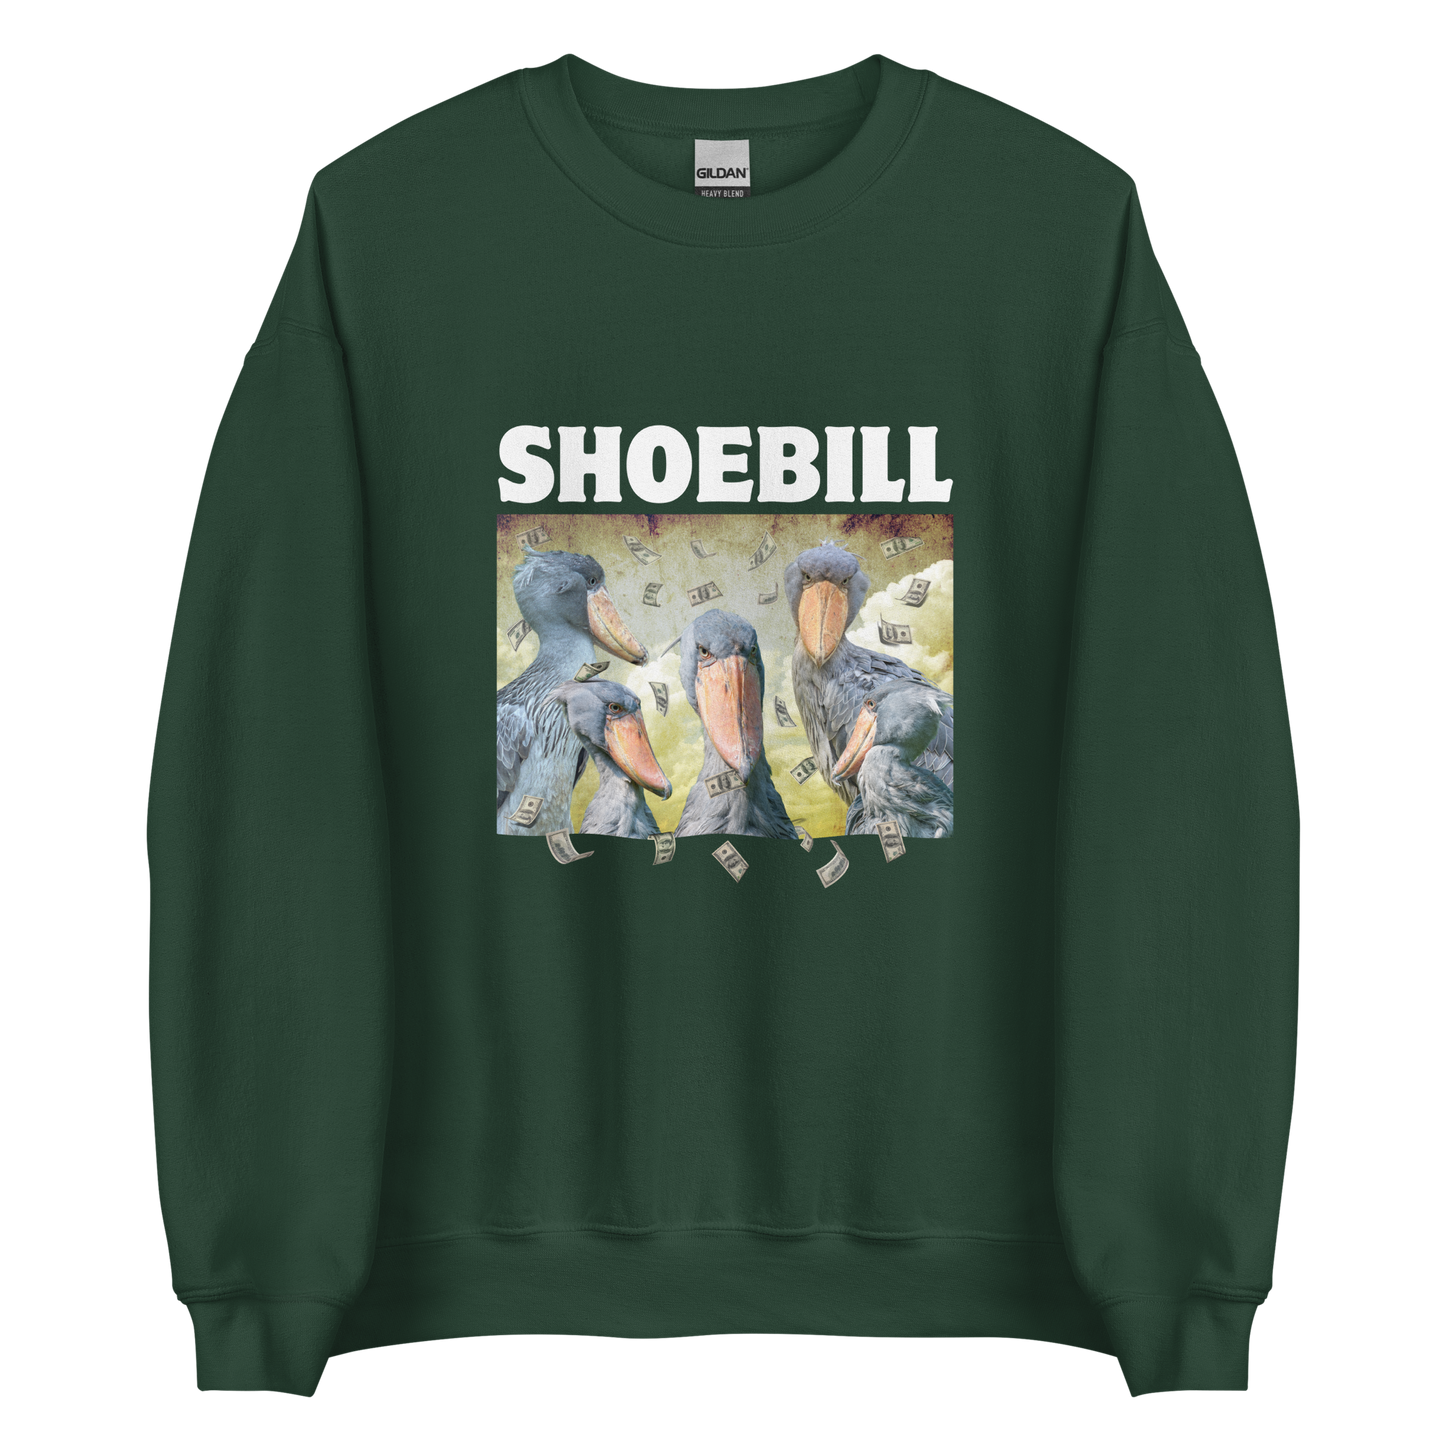 Forest Green Shoebill Sweatshirt featuring a cool Shoebill graphic on the chest - Artsy/Funny Graphic Shoebill Stork Sweatshirts - Boozy Fox